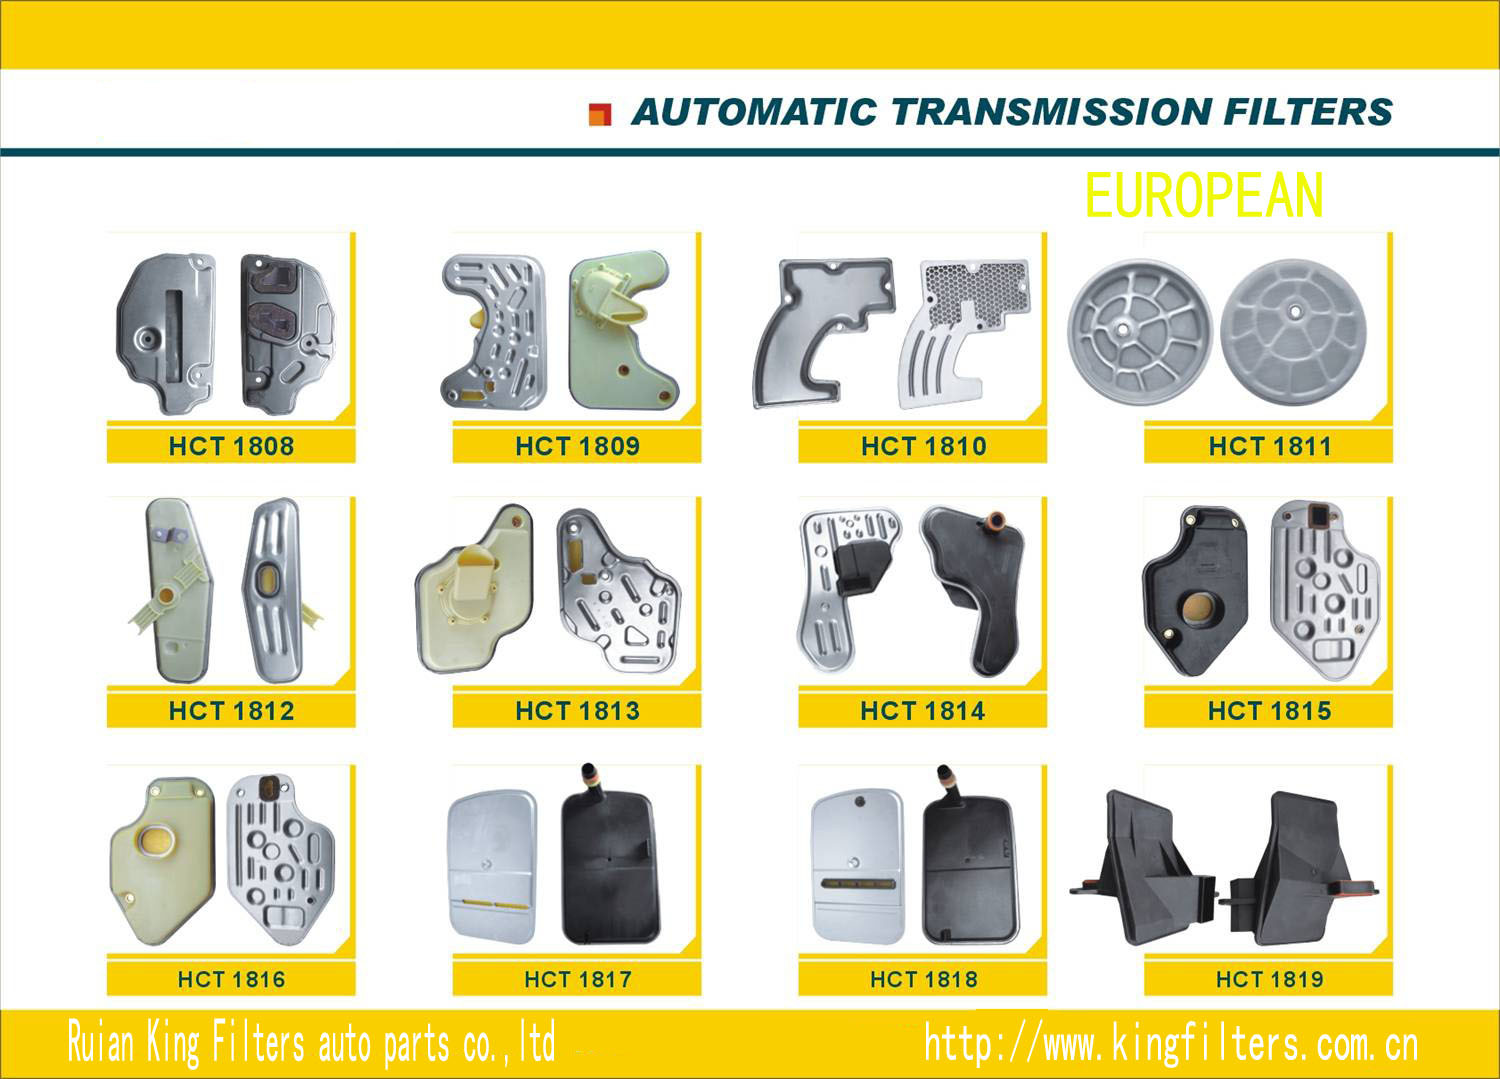 Automatic Transmission Filterw (European)